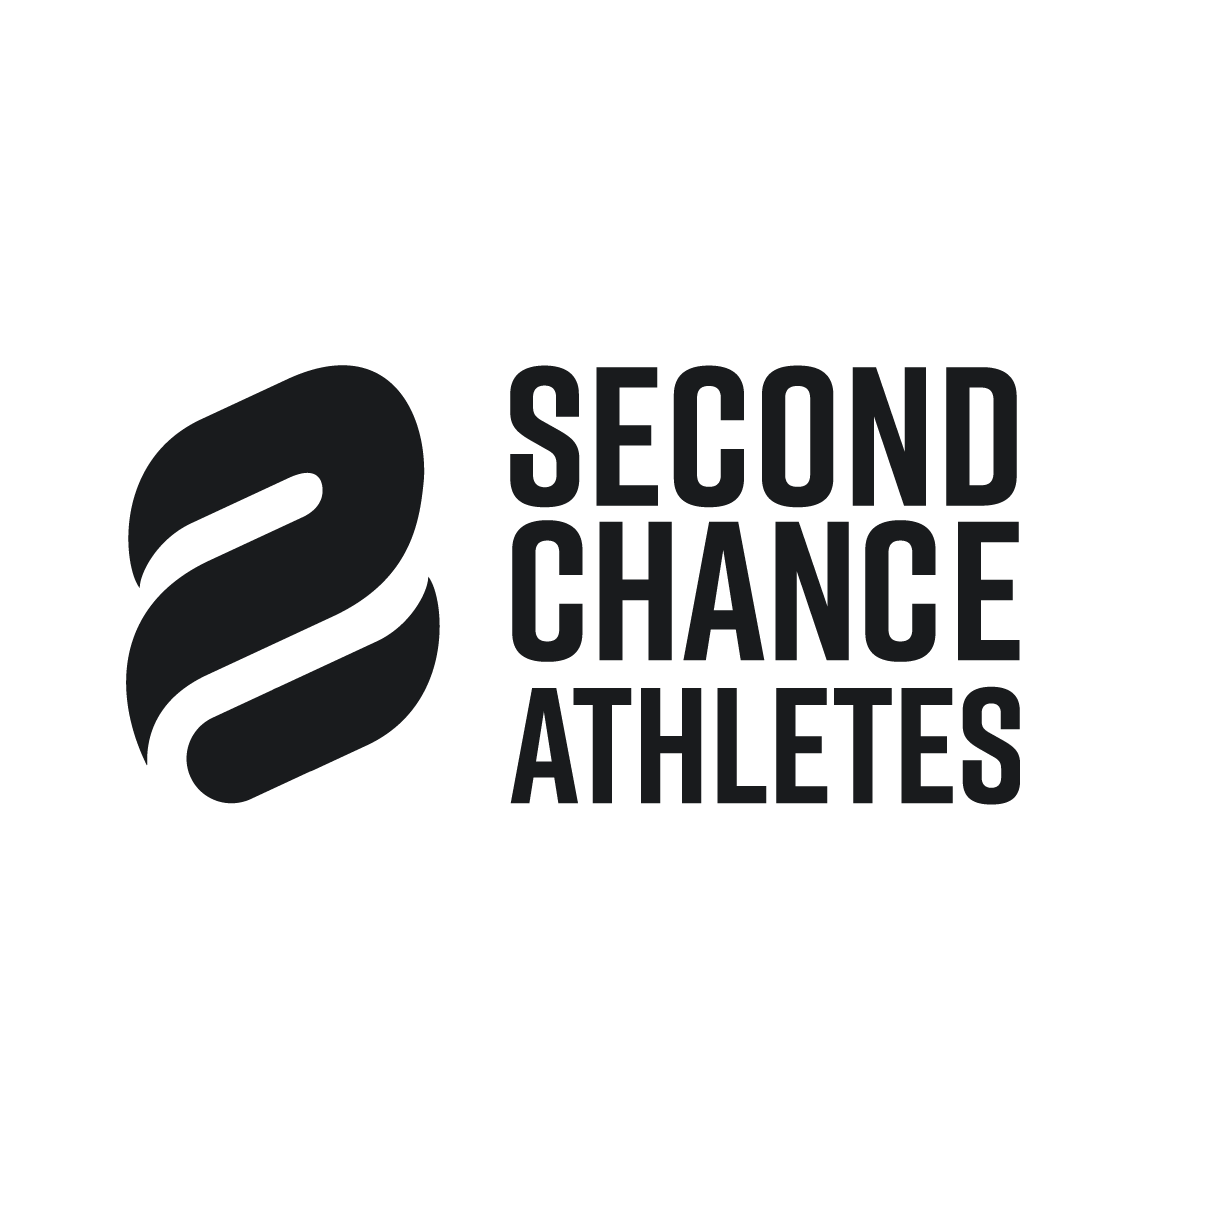 Second Chance Athletes logo